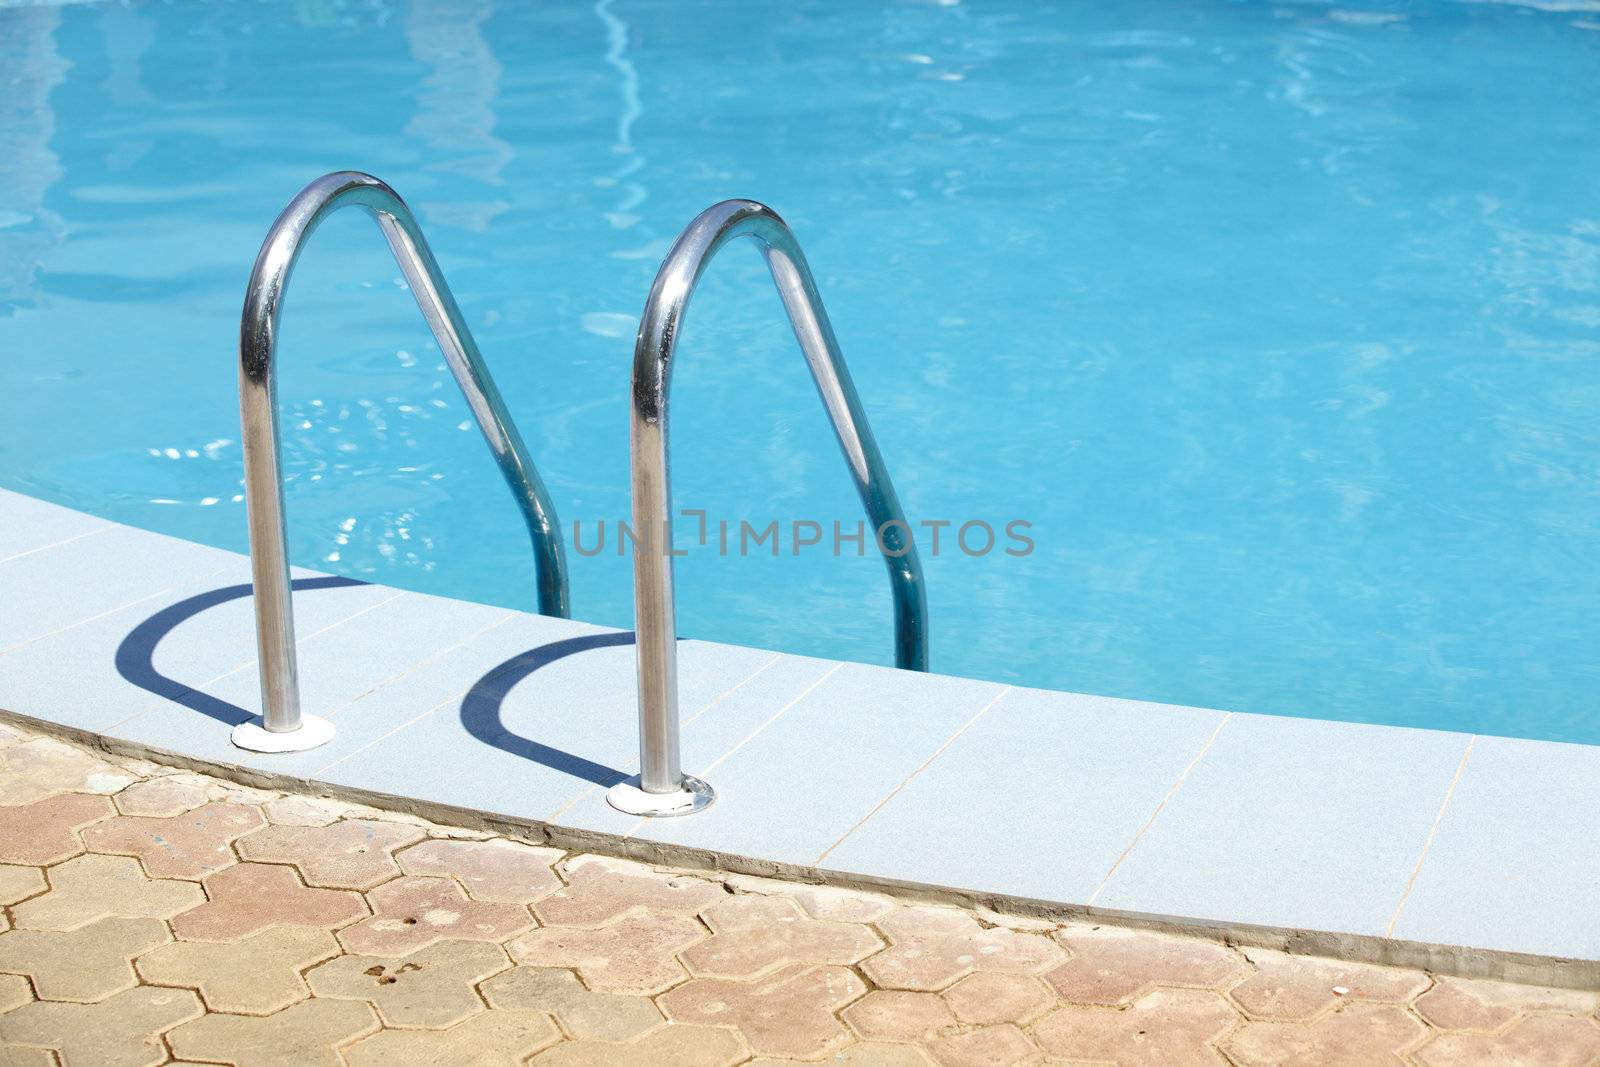 Handrail of the public swimming pool. Horizontal photo